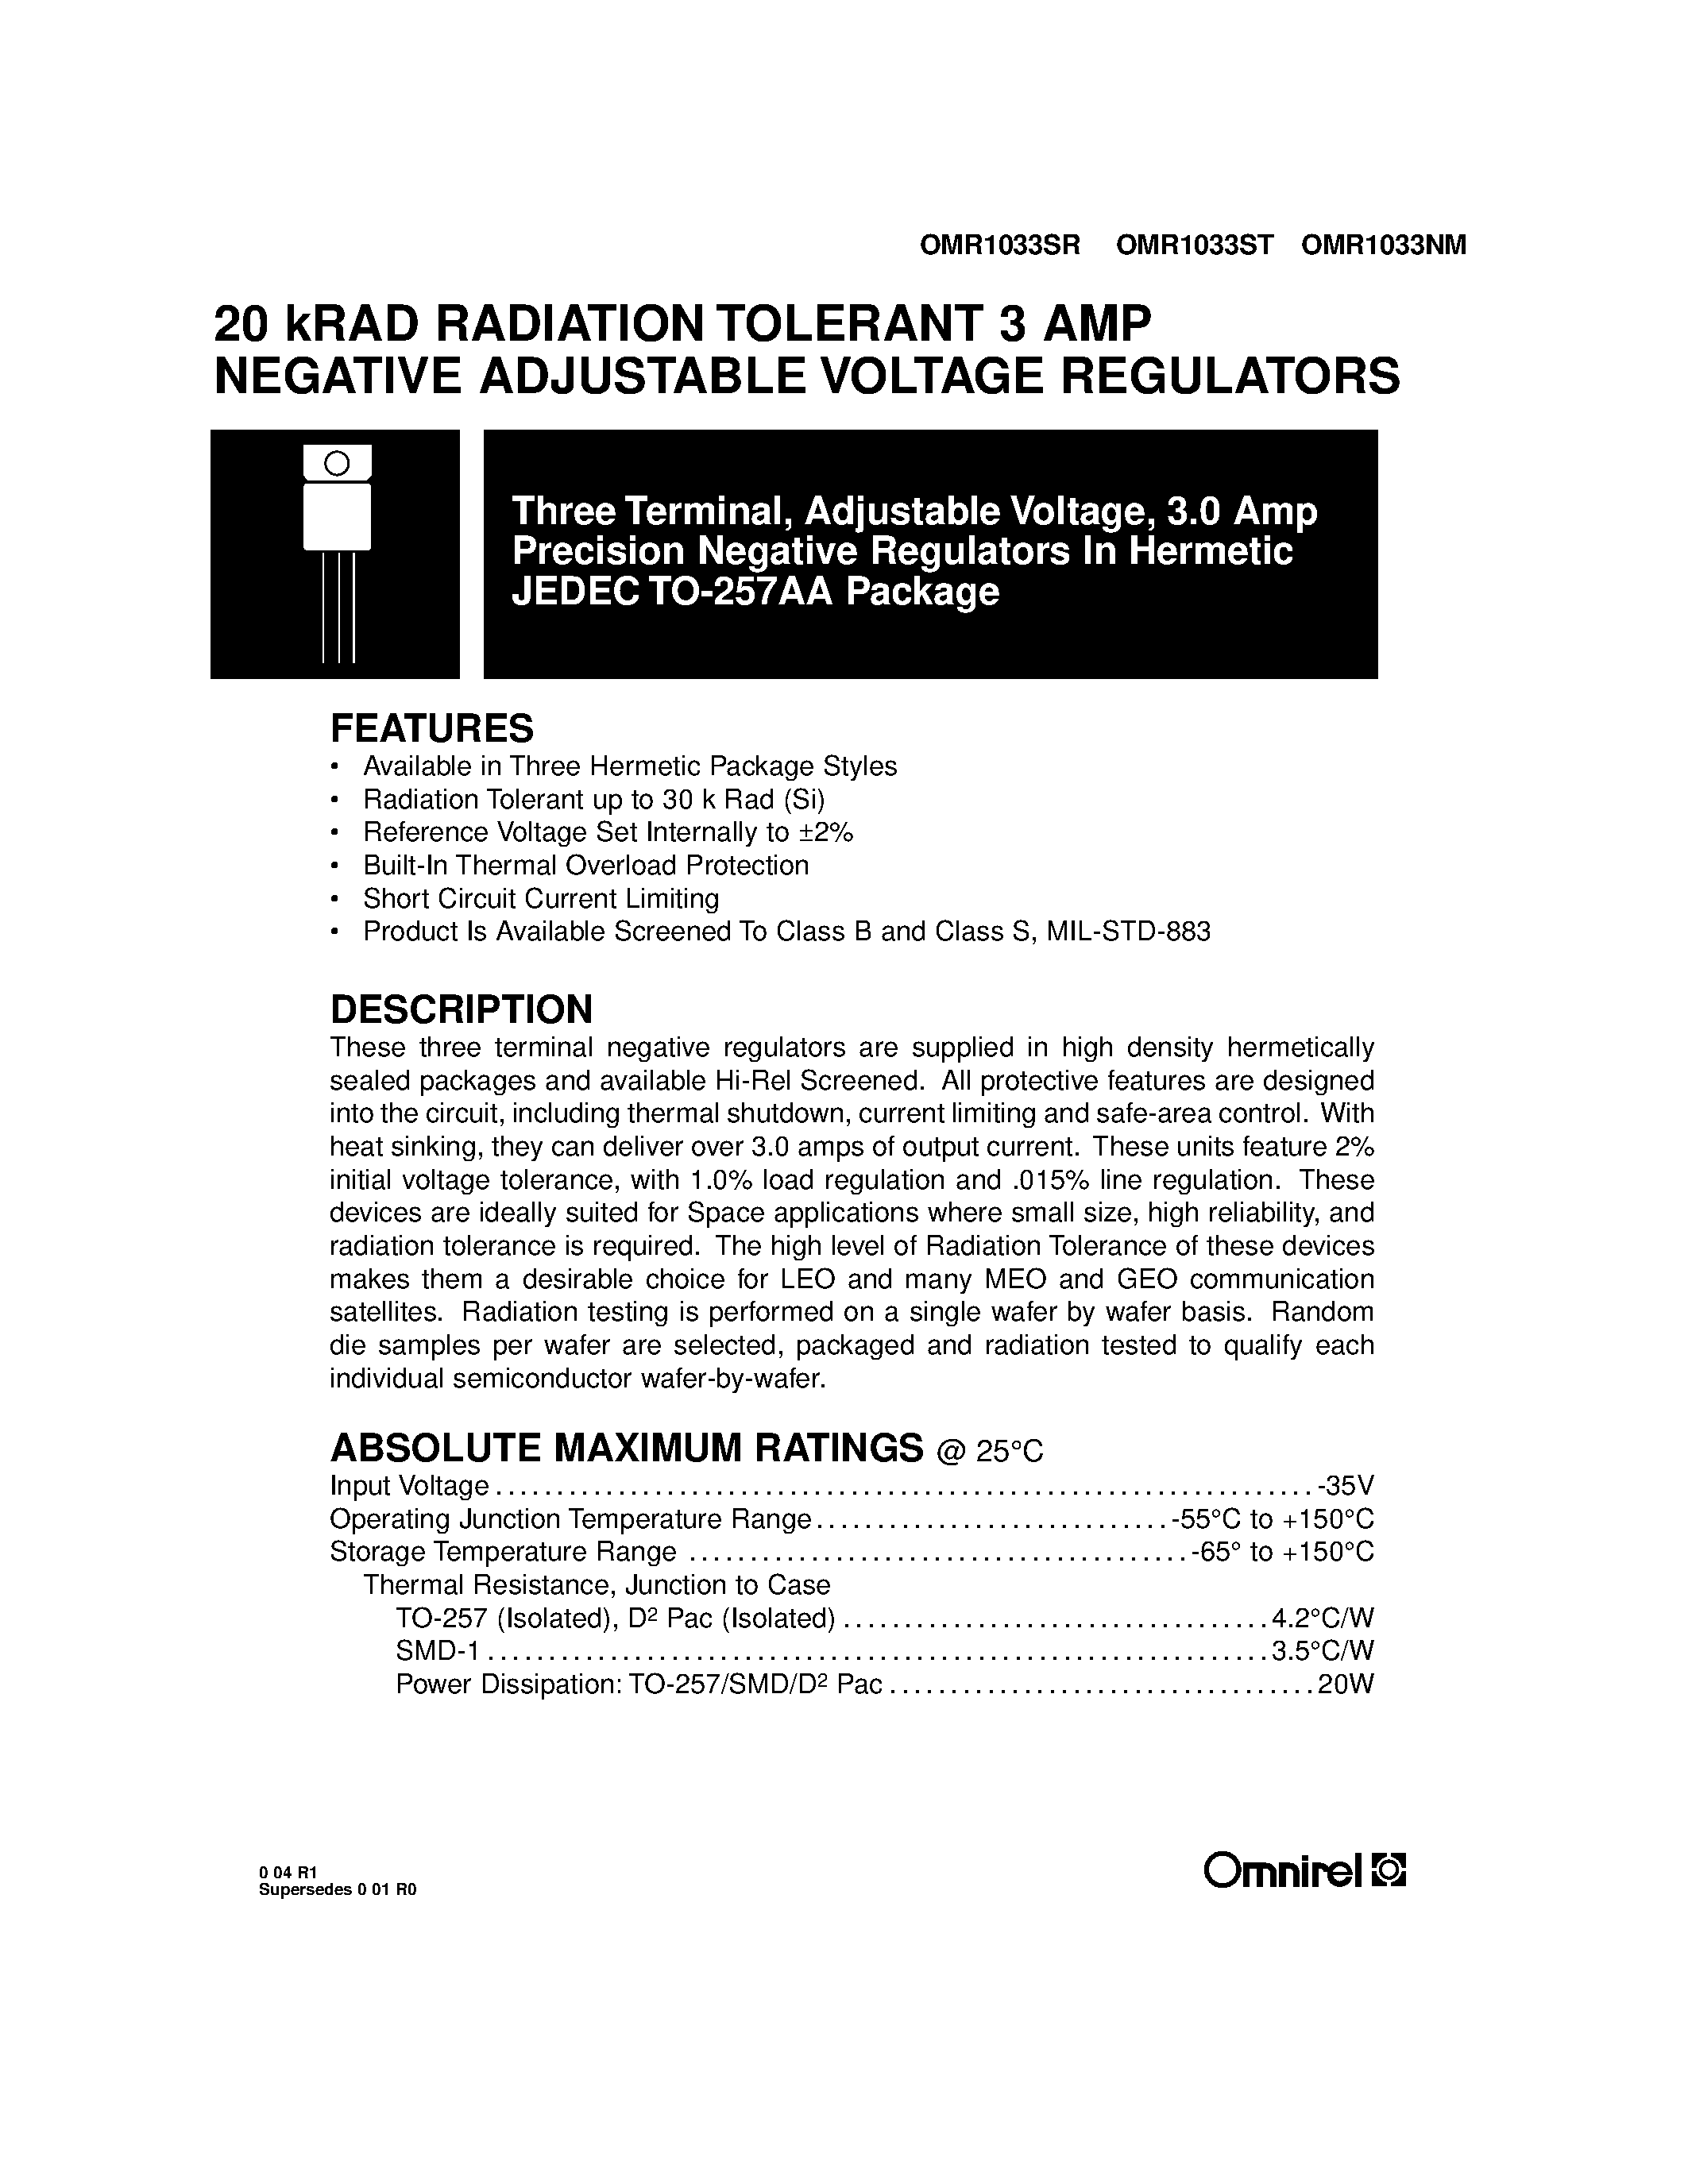 Datasheet OMR1033SR - 20 kRAD RADIATION TOLERANT 3 AMP NEGATIVE ADJUSTABLE VOLTAGE REGULATORS page 1